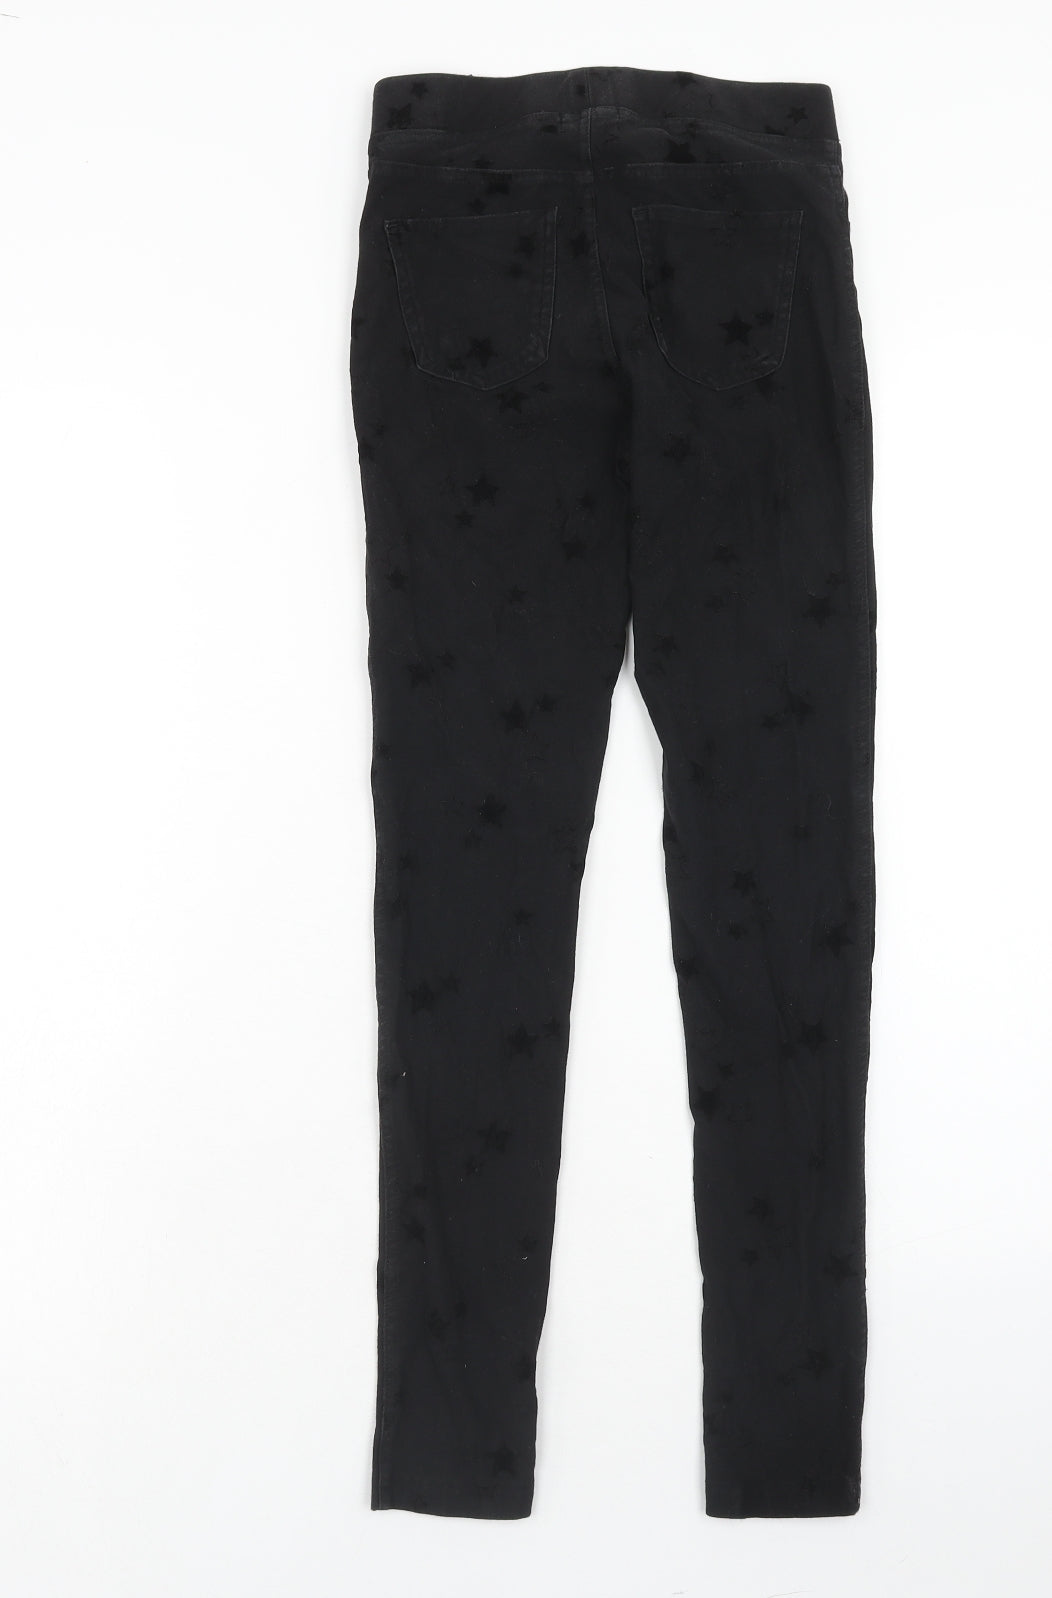 H&M Girls Black Geometric Cotton Jegging Jeans Size 12-13 Years Regular Pullover - Star Pattern